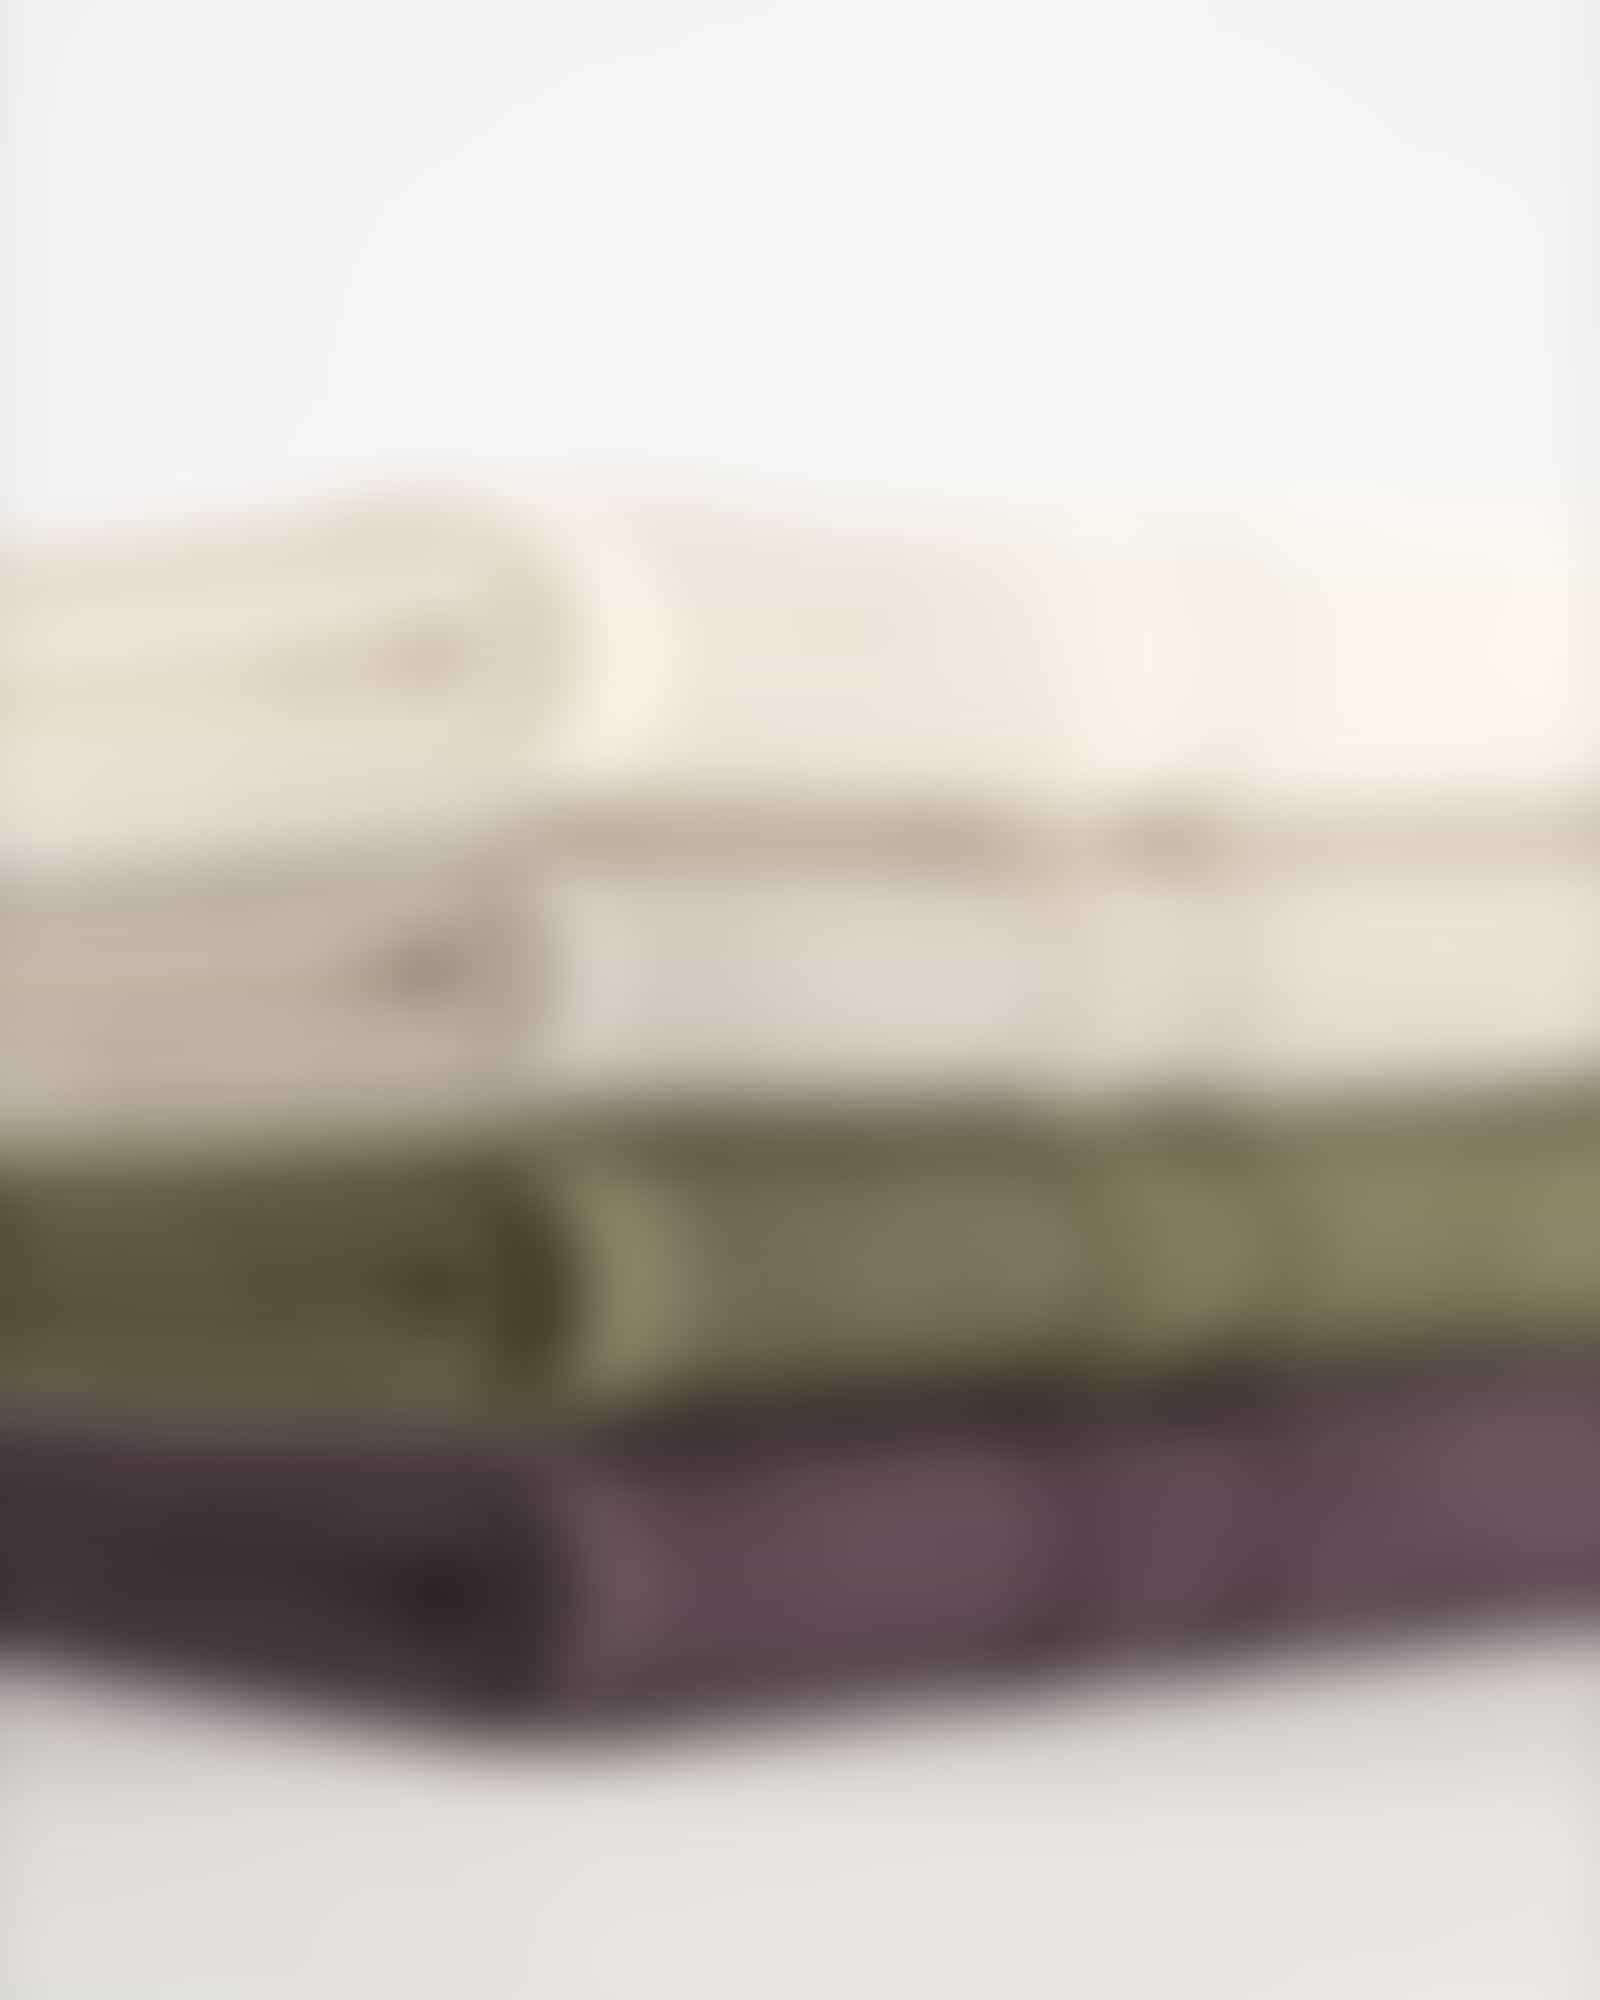 Möve Handtücher Wellbeing Perlstruktur - Farbe: sea grass - 677 - Handtuch 50x100 cm